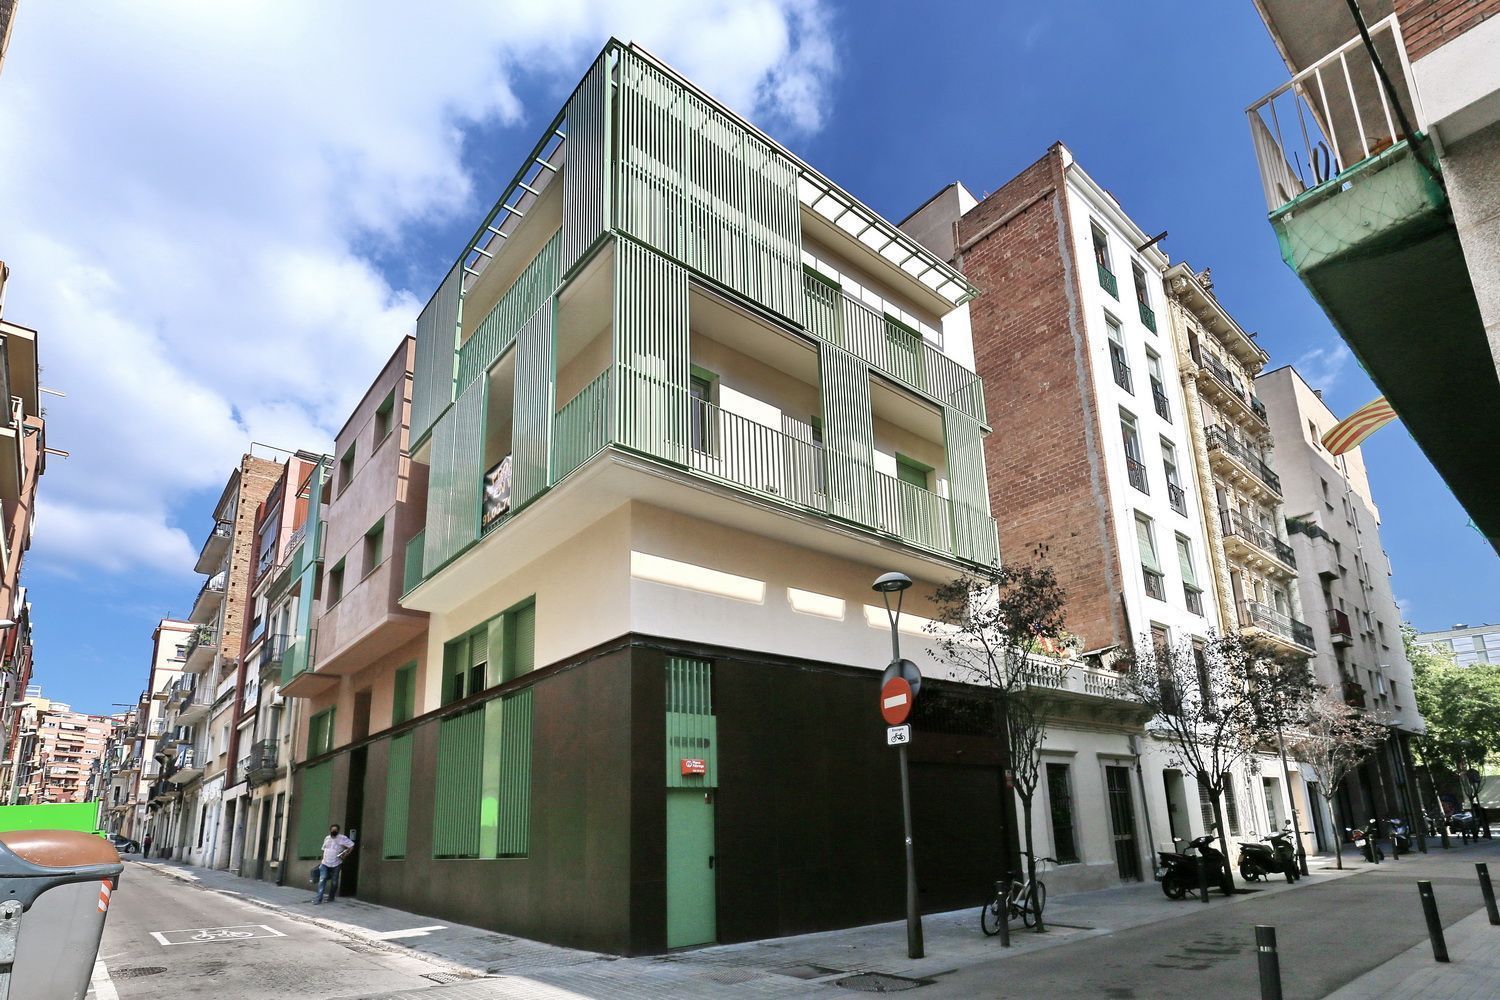 Lejlighed i Barcelona, Gràcia, salg